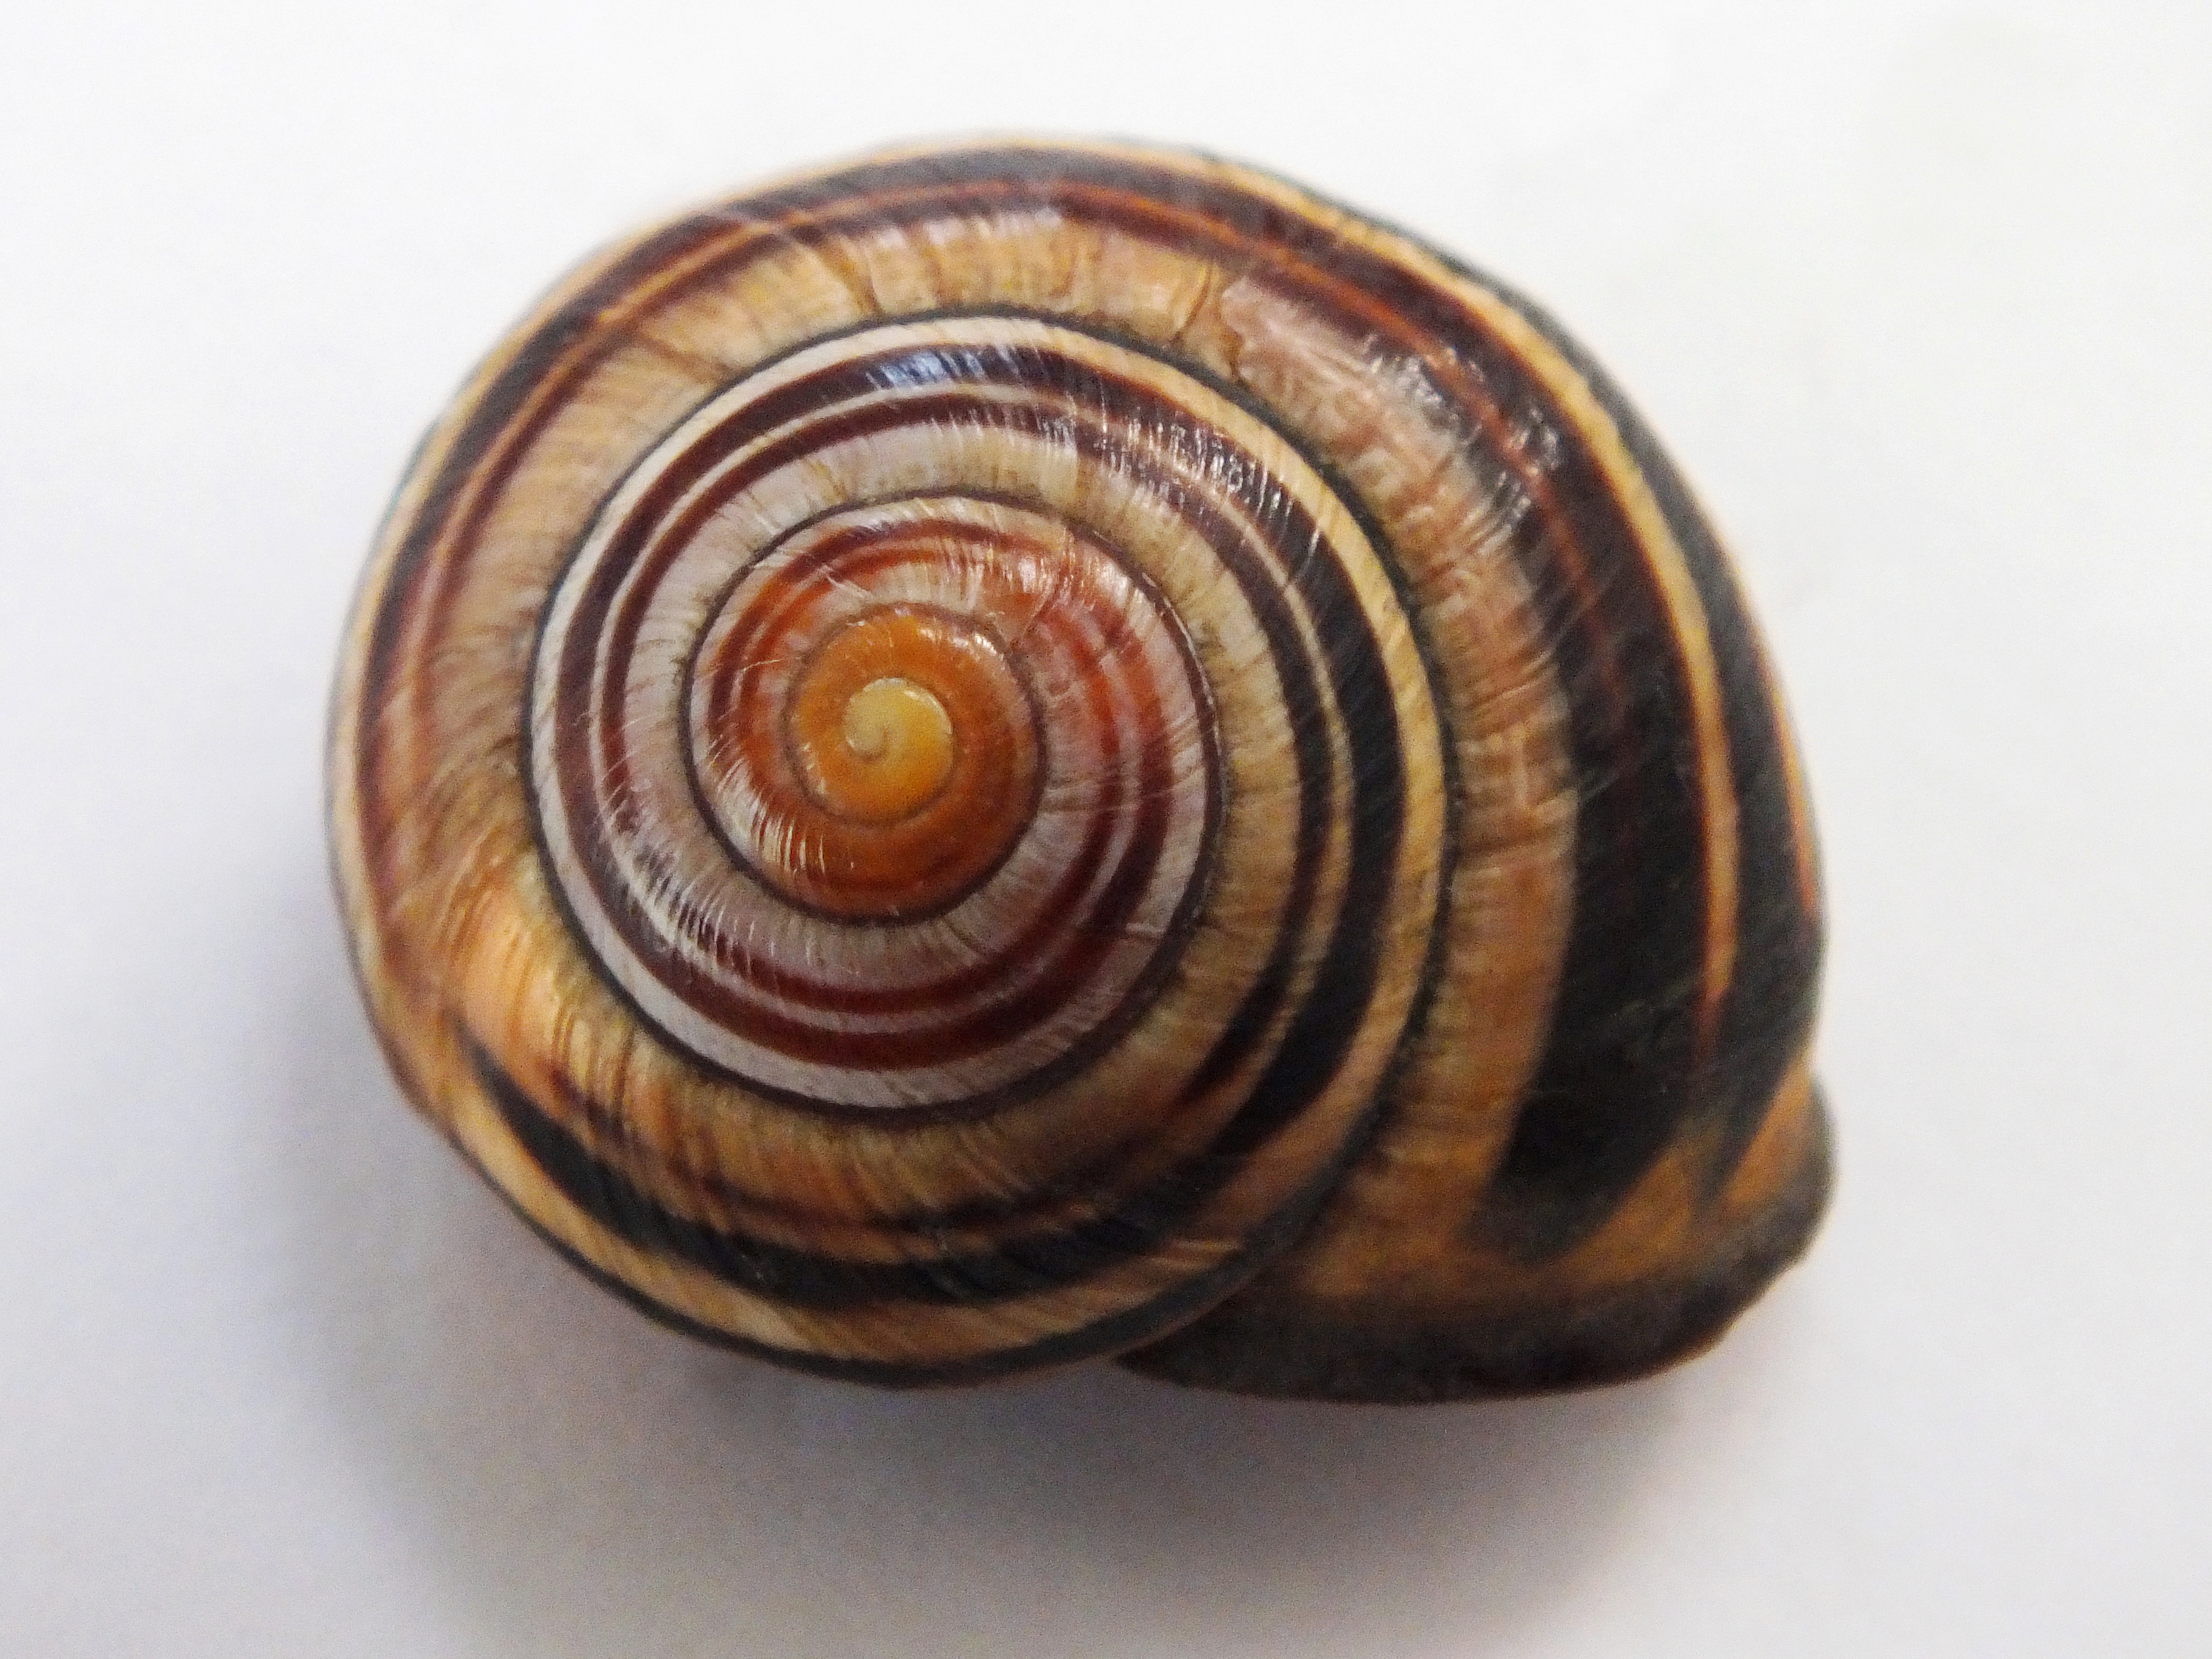 Garden Snail Shell - wallpaper. | Illustration Research | Pinterest ...